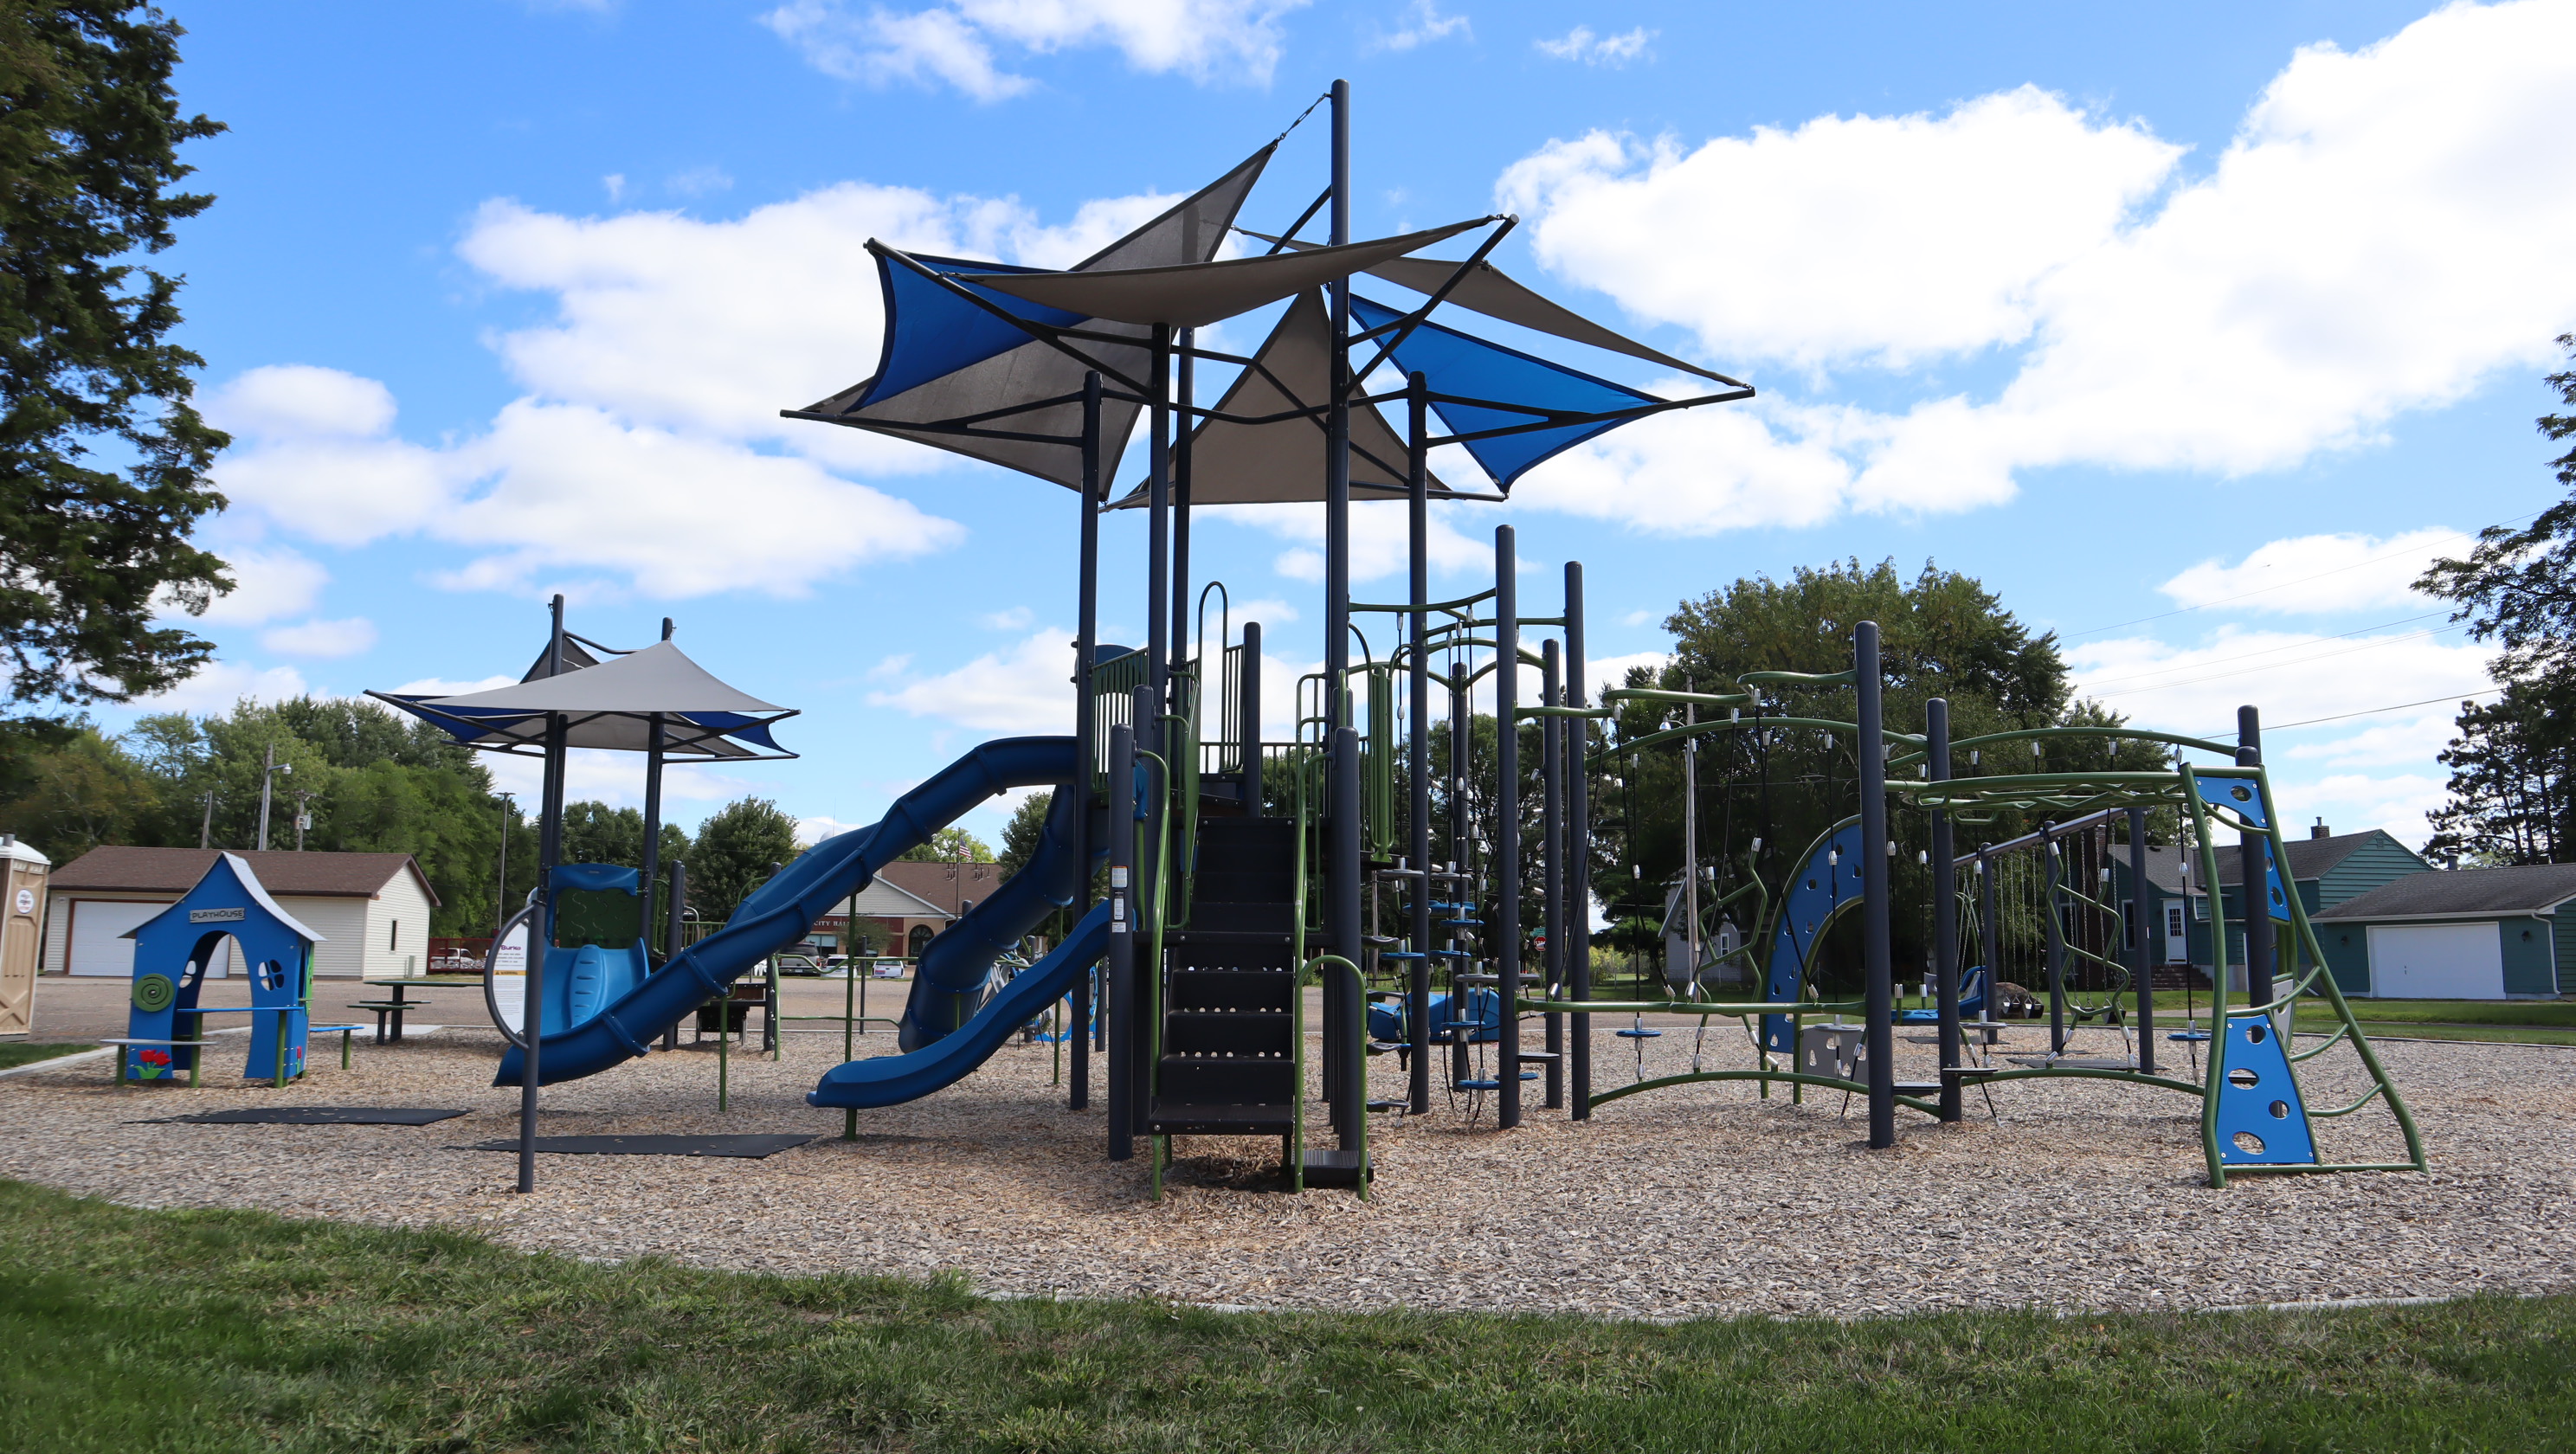 Lions Park Playground in Hugo, MN